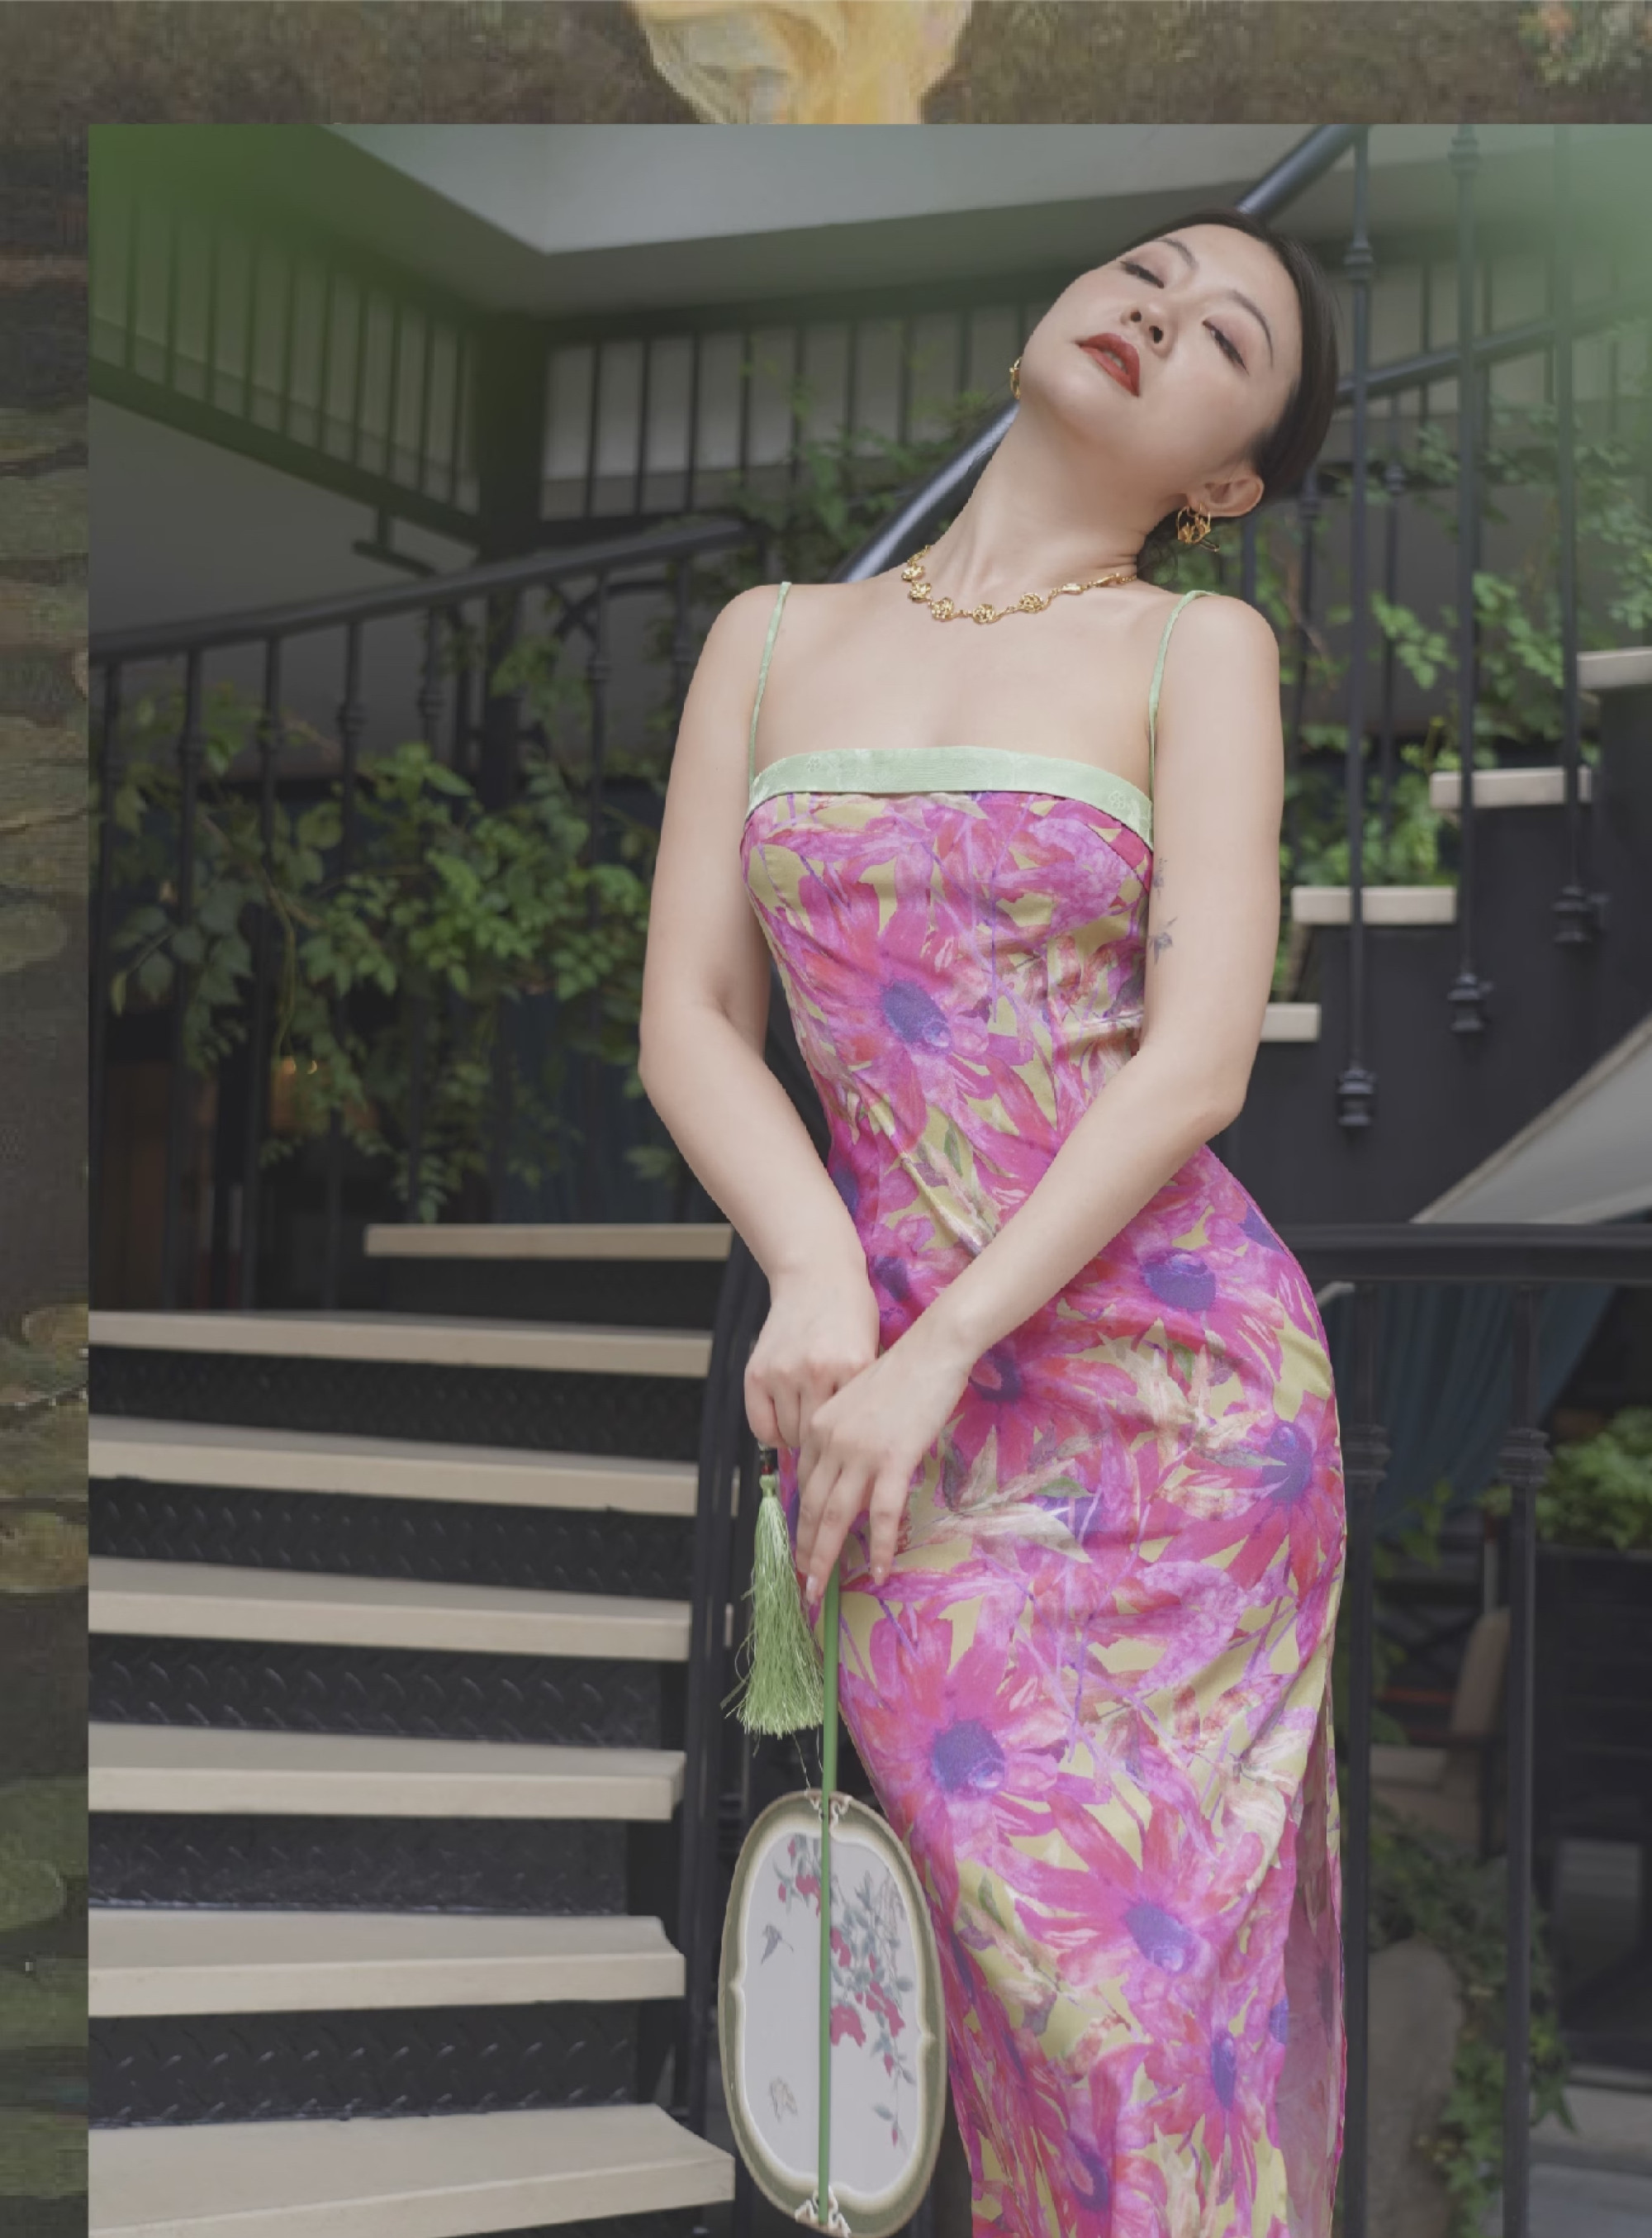 Fashion victim: China actress wraps 10 layers of cling film around